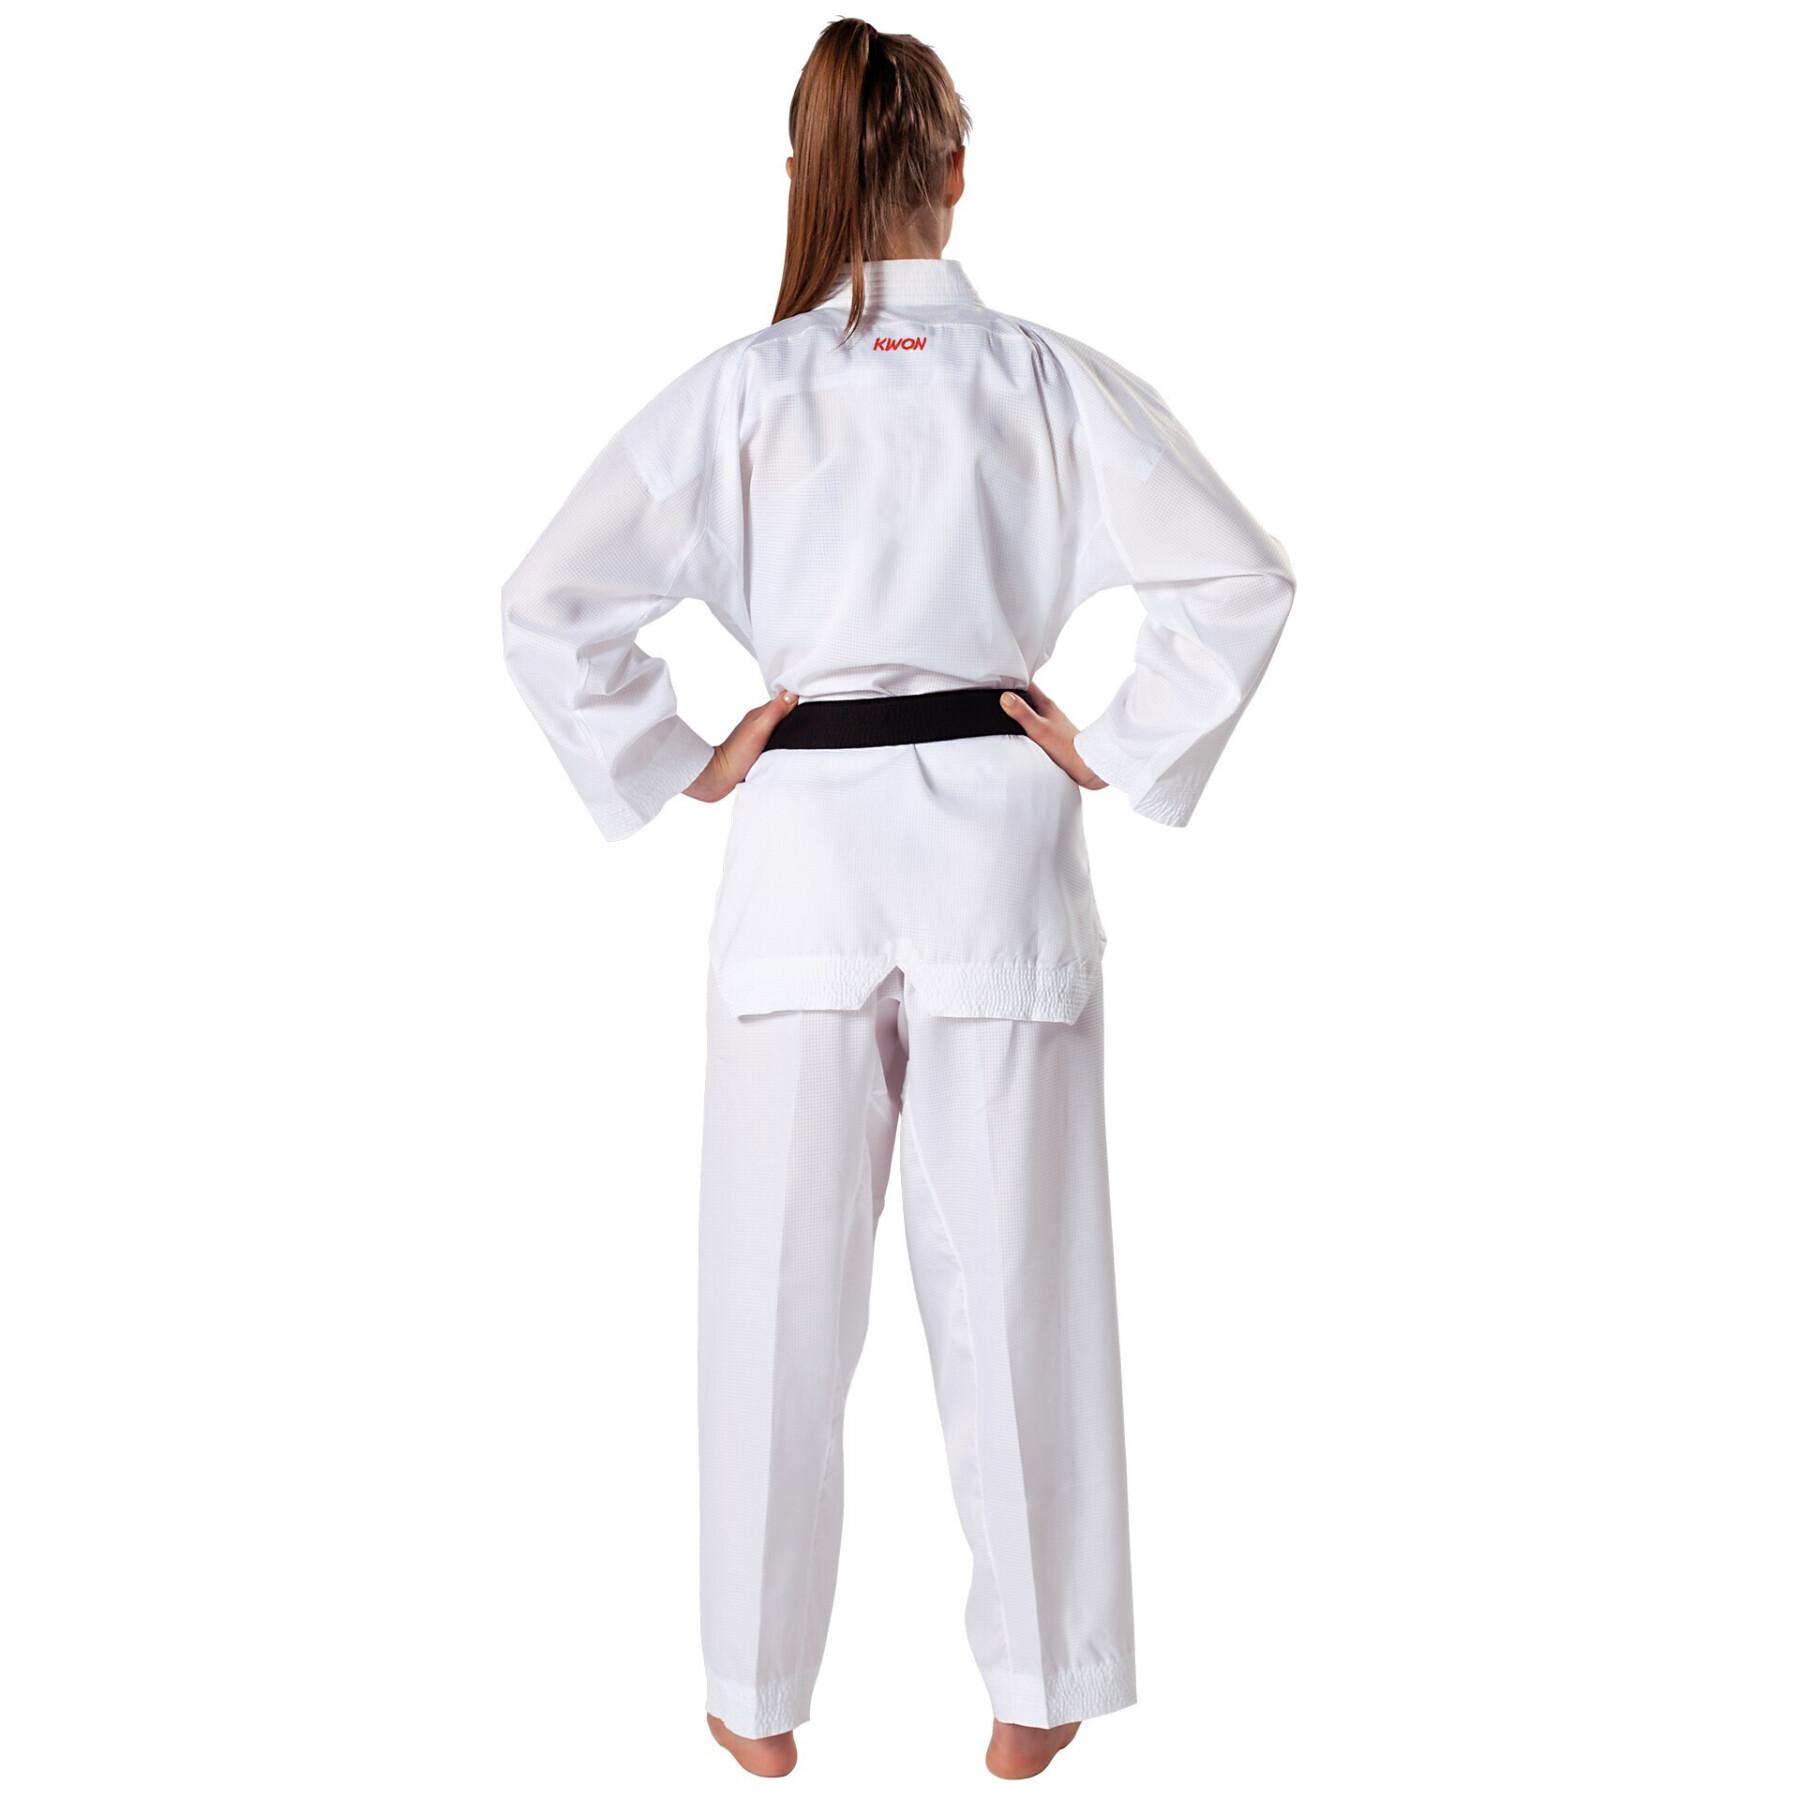 Kimono karate approvato wkf Kwon Supralite